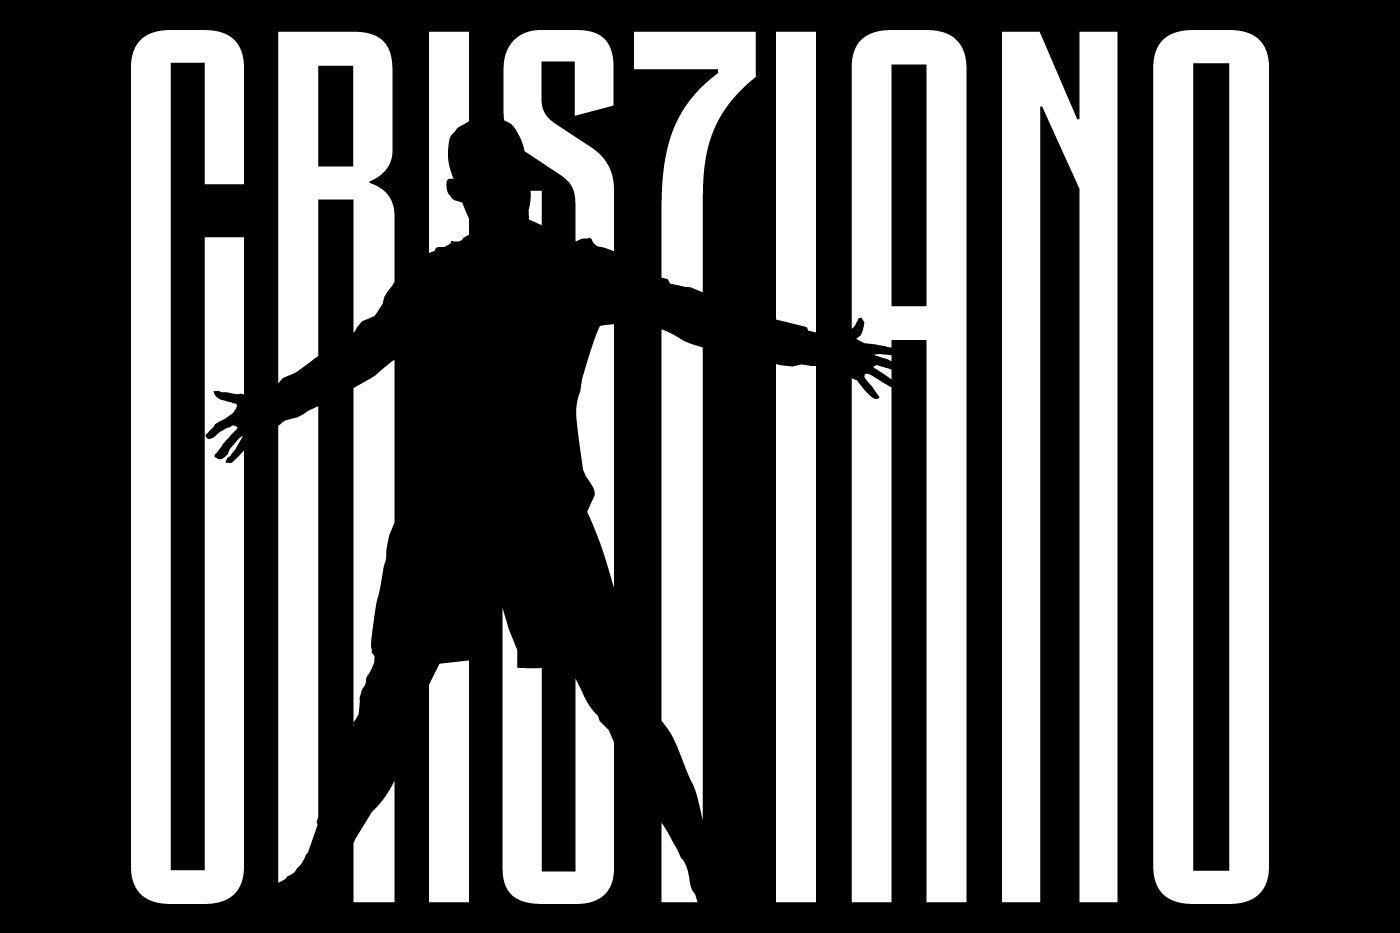 Cristiano Ronaldo signs for Juventus!